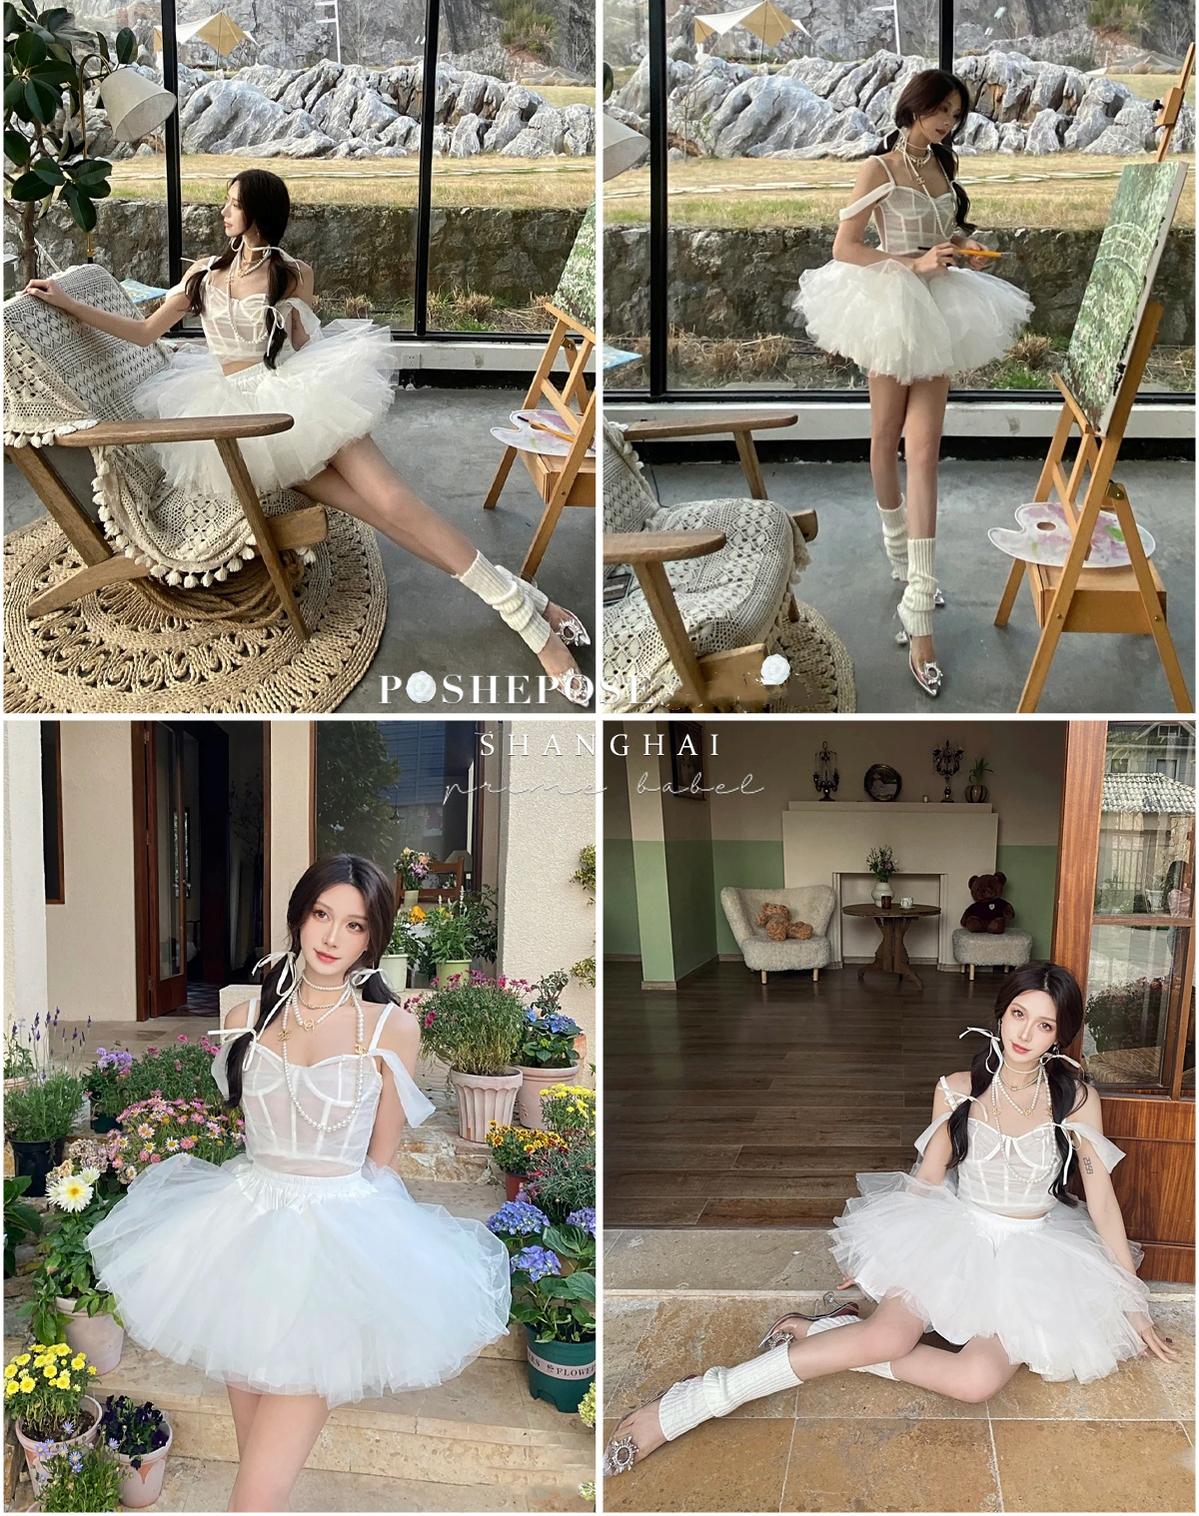 Lolita Dress Petticoat Puffy Black And White Pettipants 36386:542654